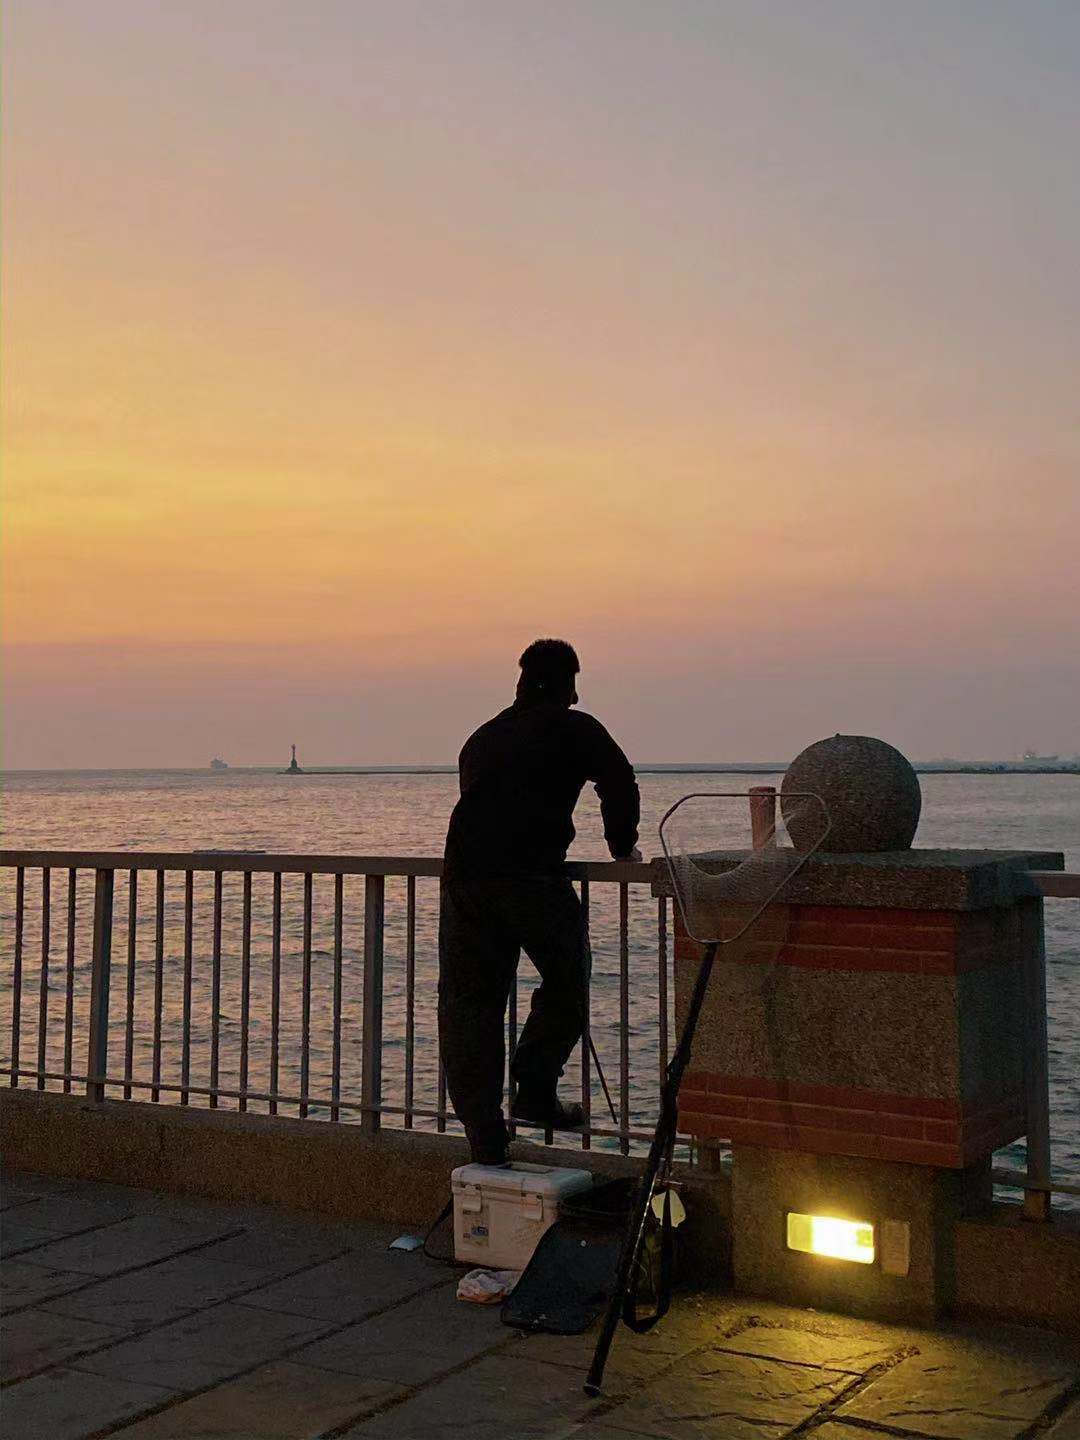 A back view of a man near a lake viewing an orange sunset